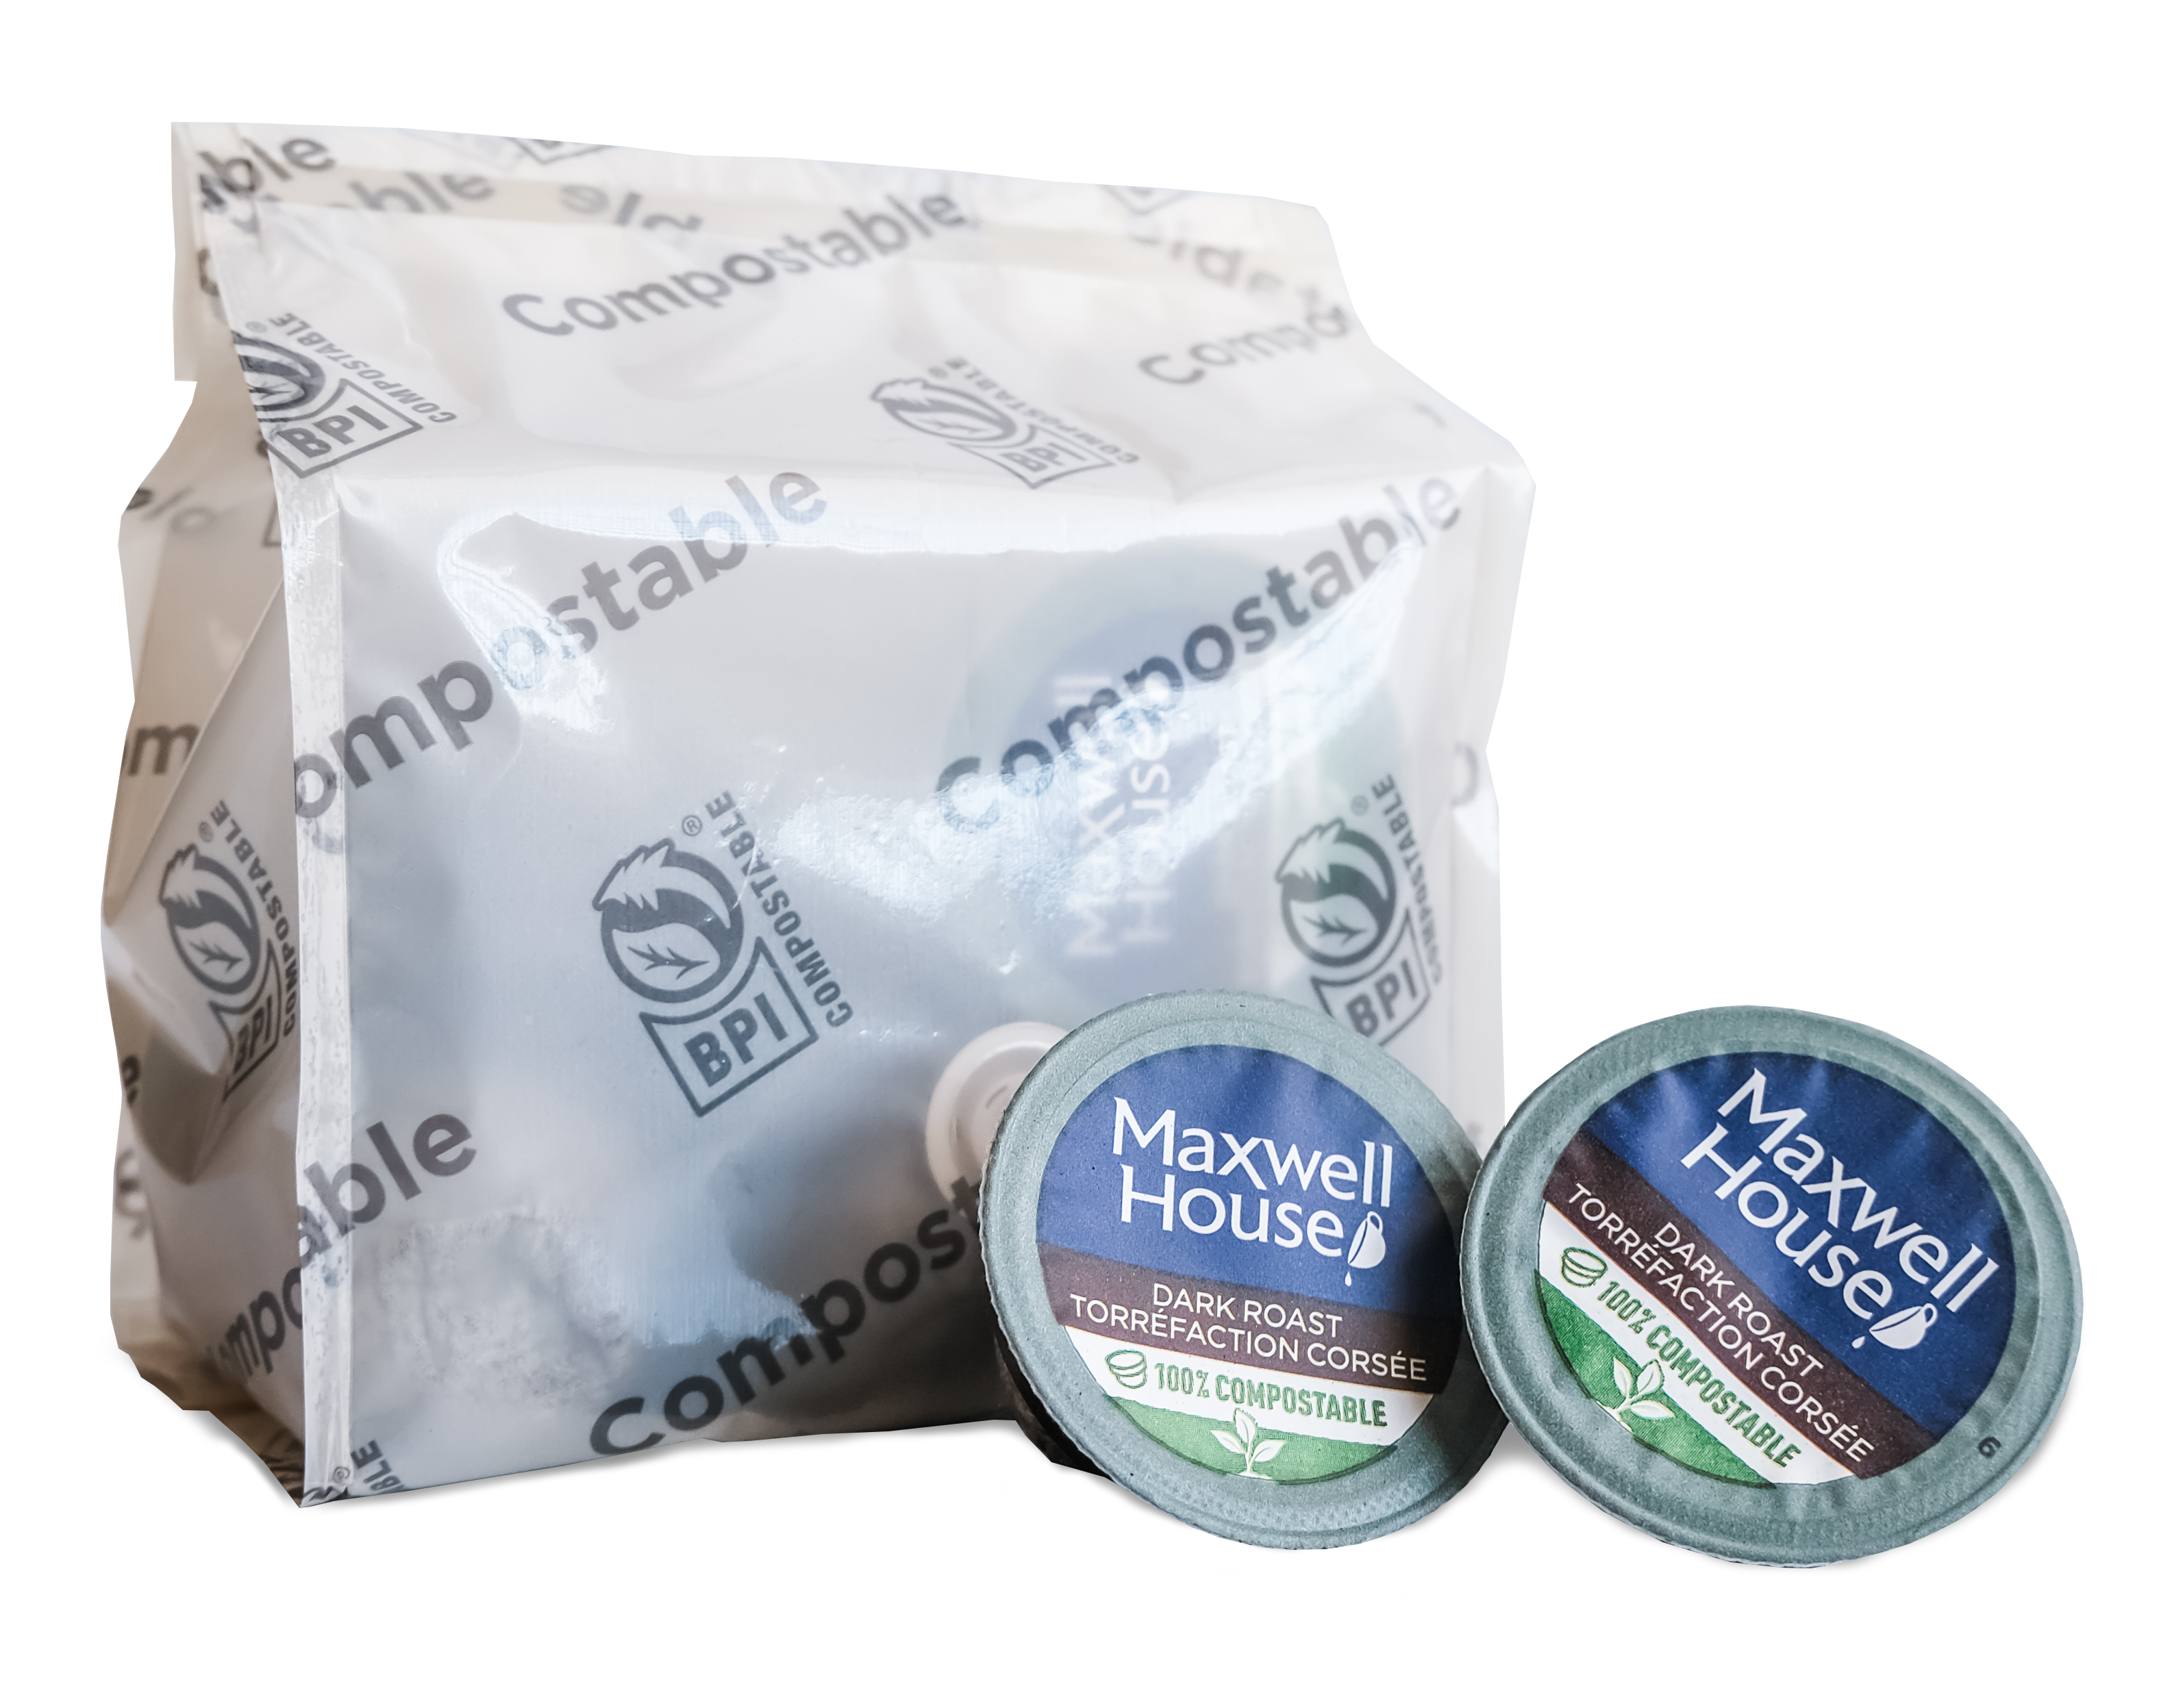 Películas compostables para capsulas y bolsas de café de Maxwell House Canada